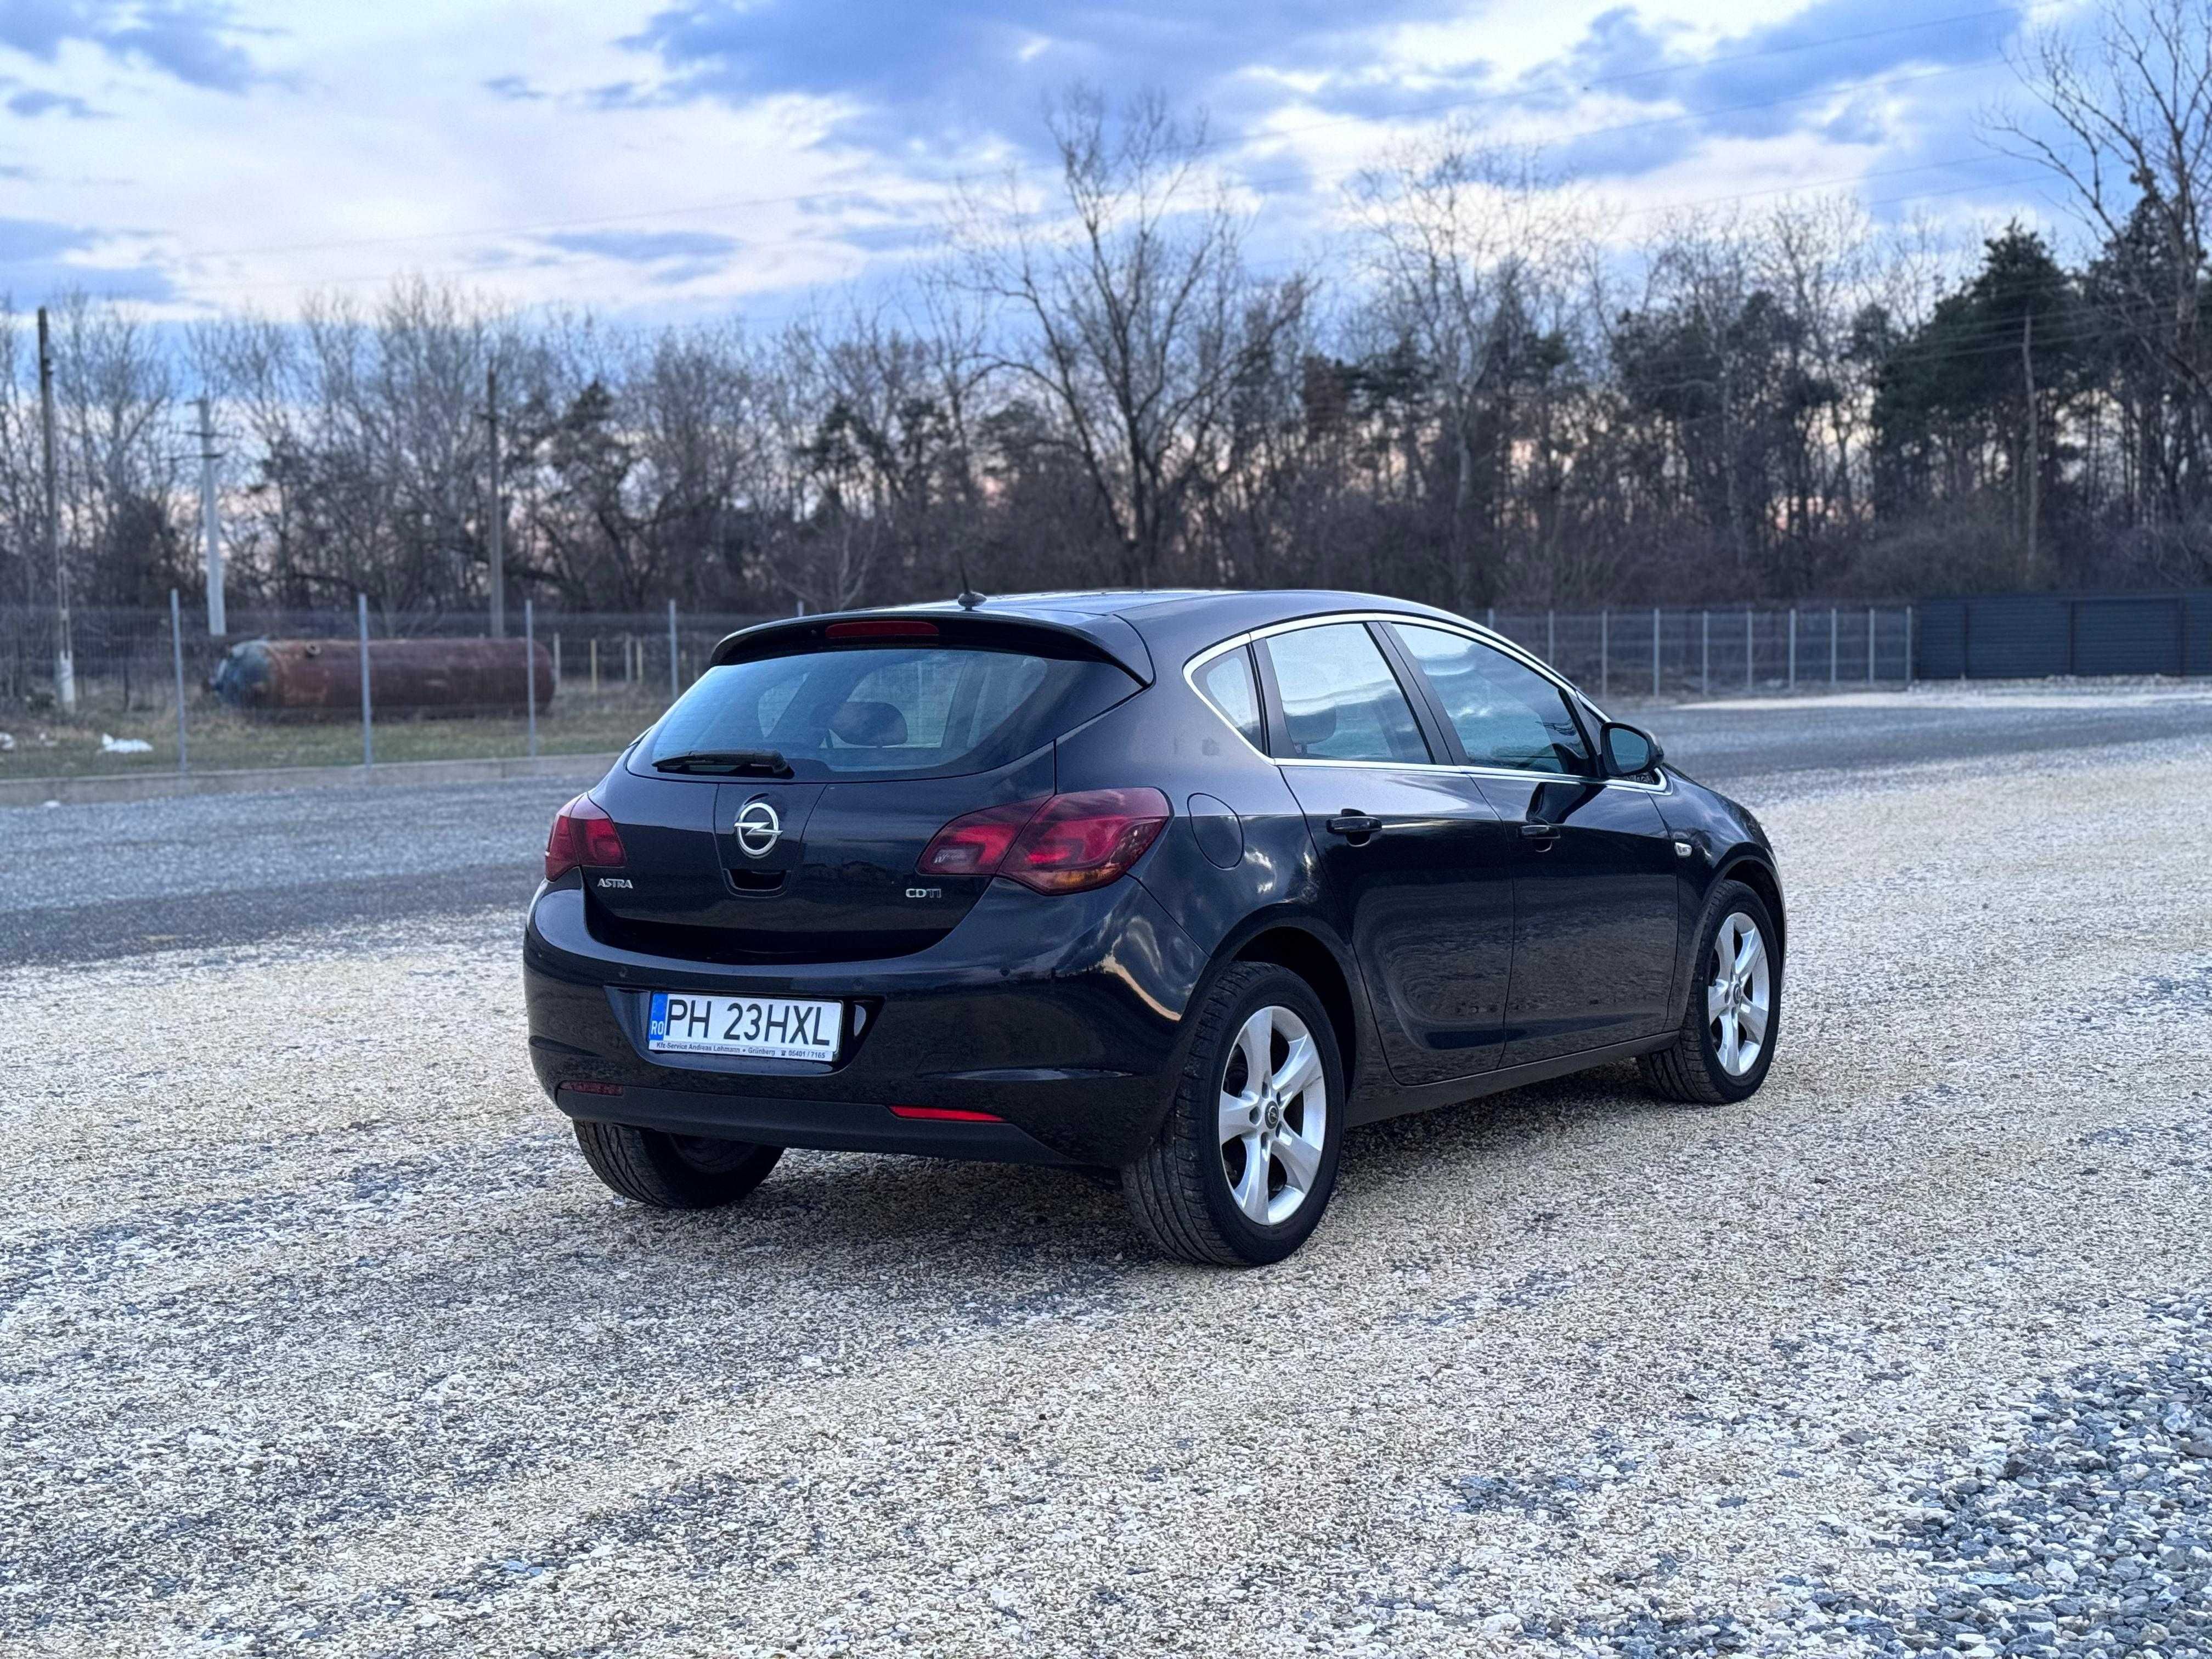 Opel Astra J 2011/11, 1,7 Diesel Euro 5
Pret =4800 € ( Negociabil)